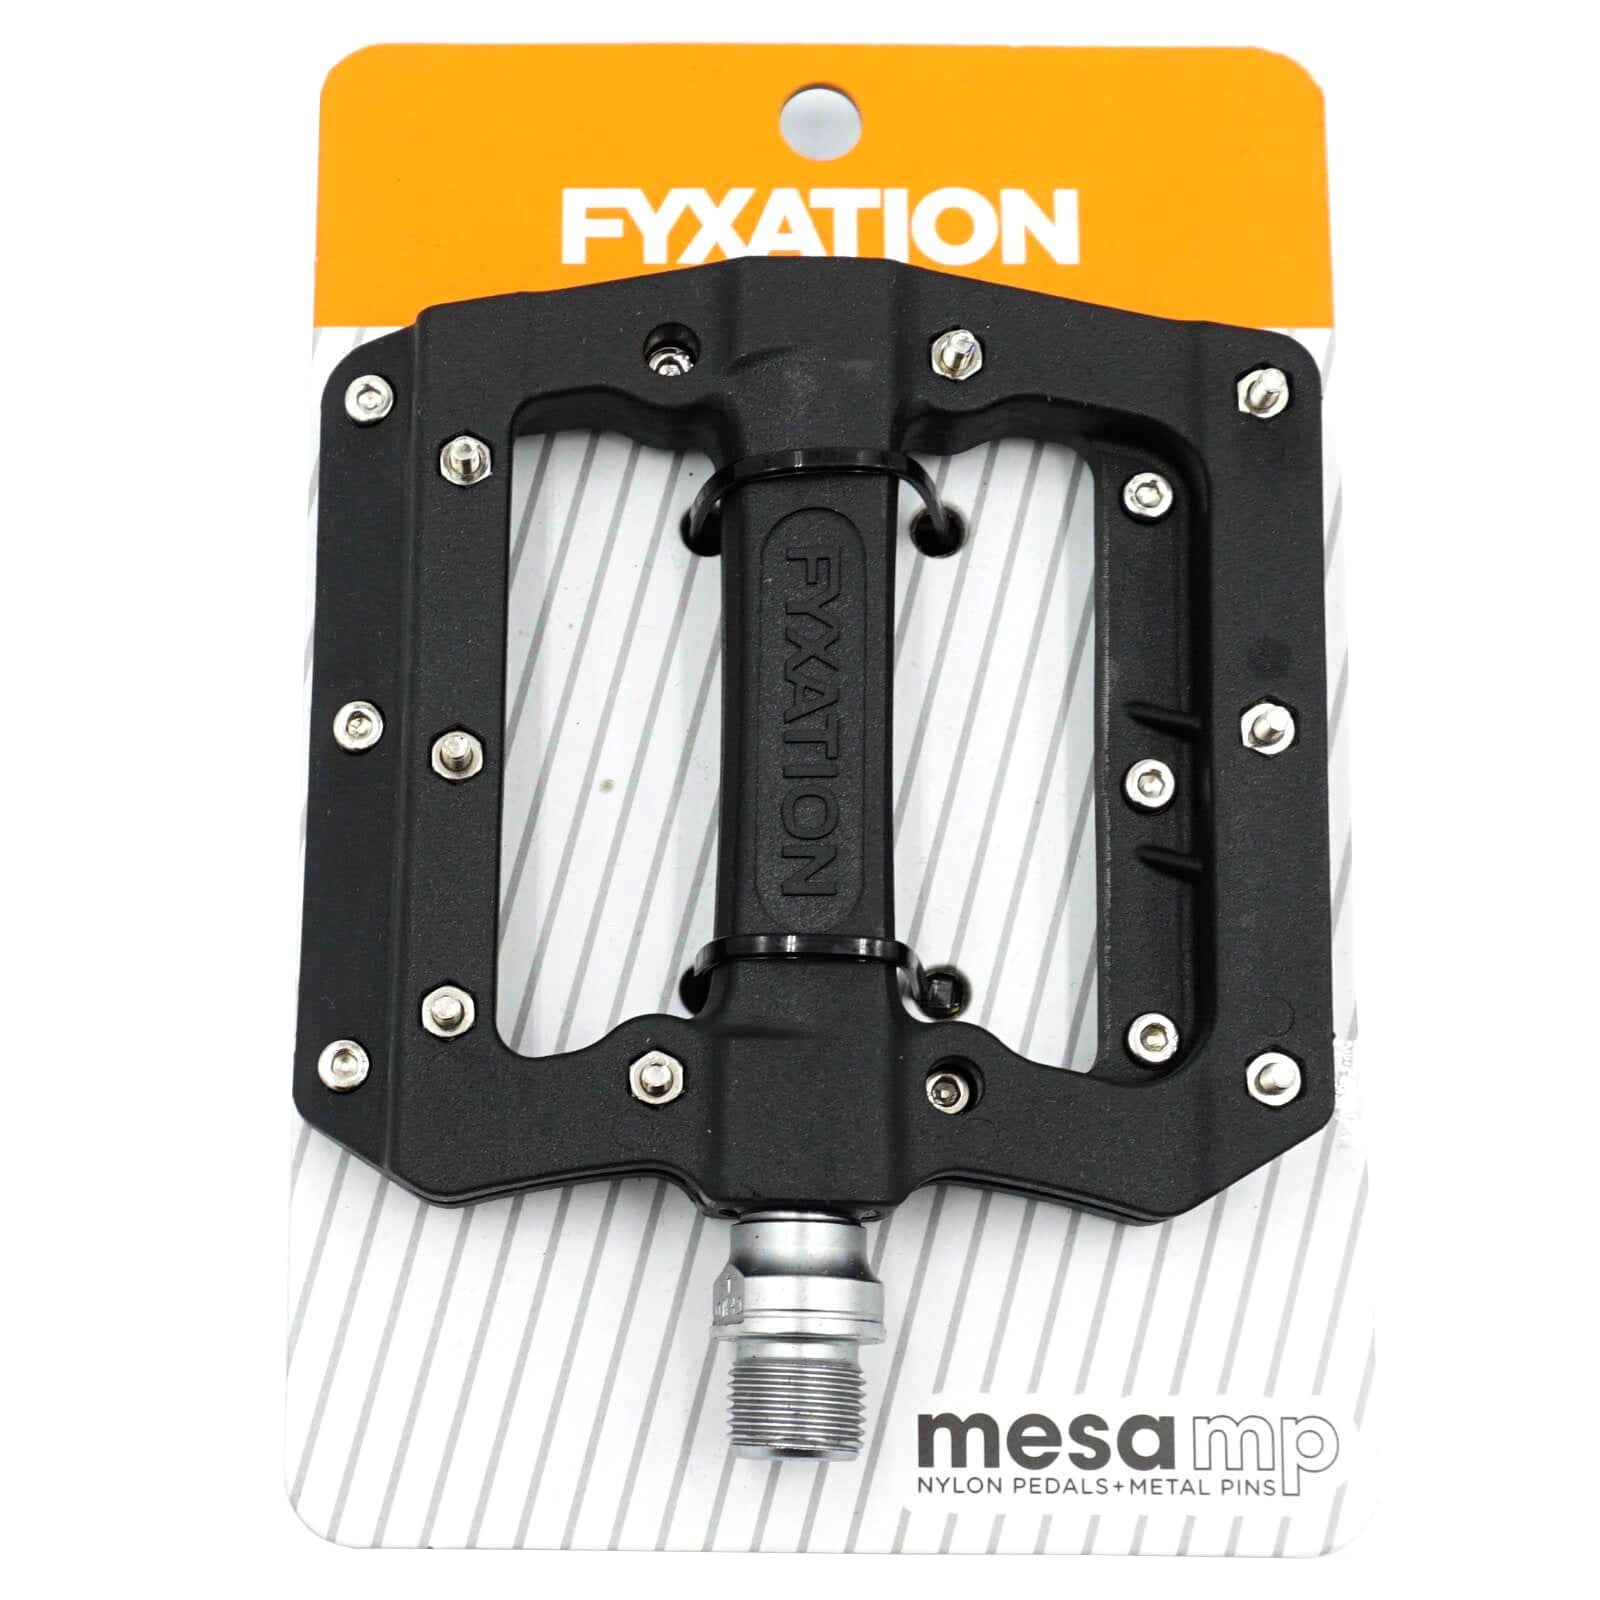 Fyxation Mesa MP Sealed Nylon Platform Pedals - The Bikesmiths